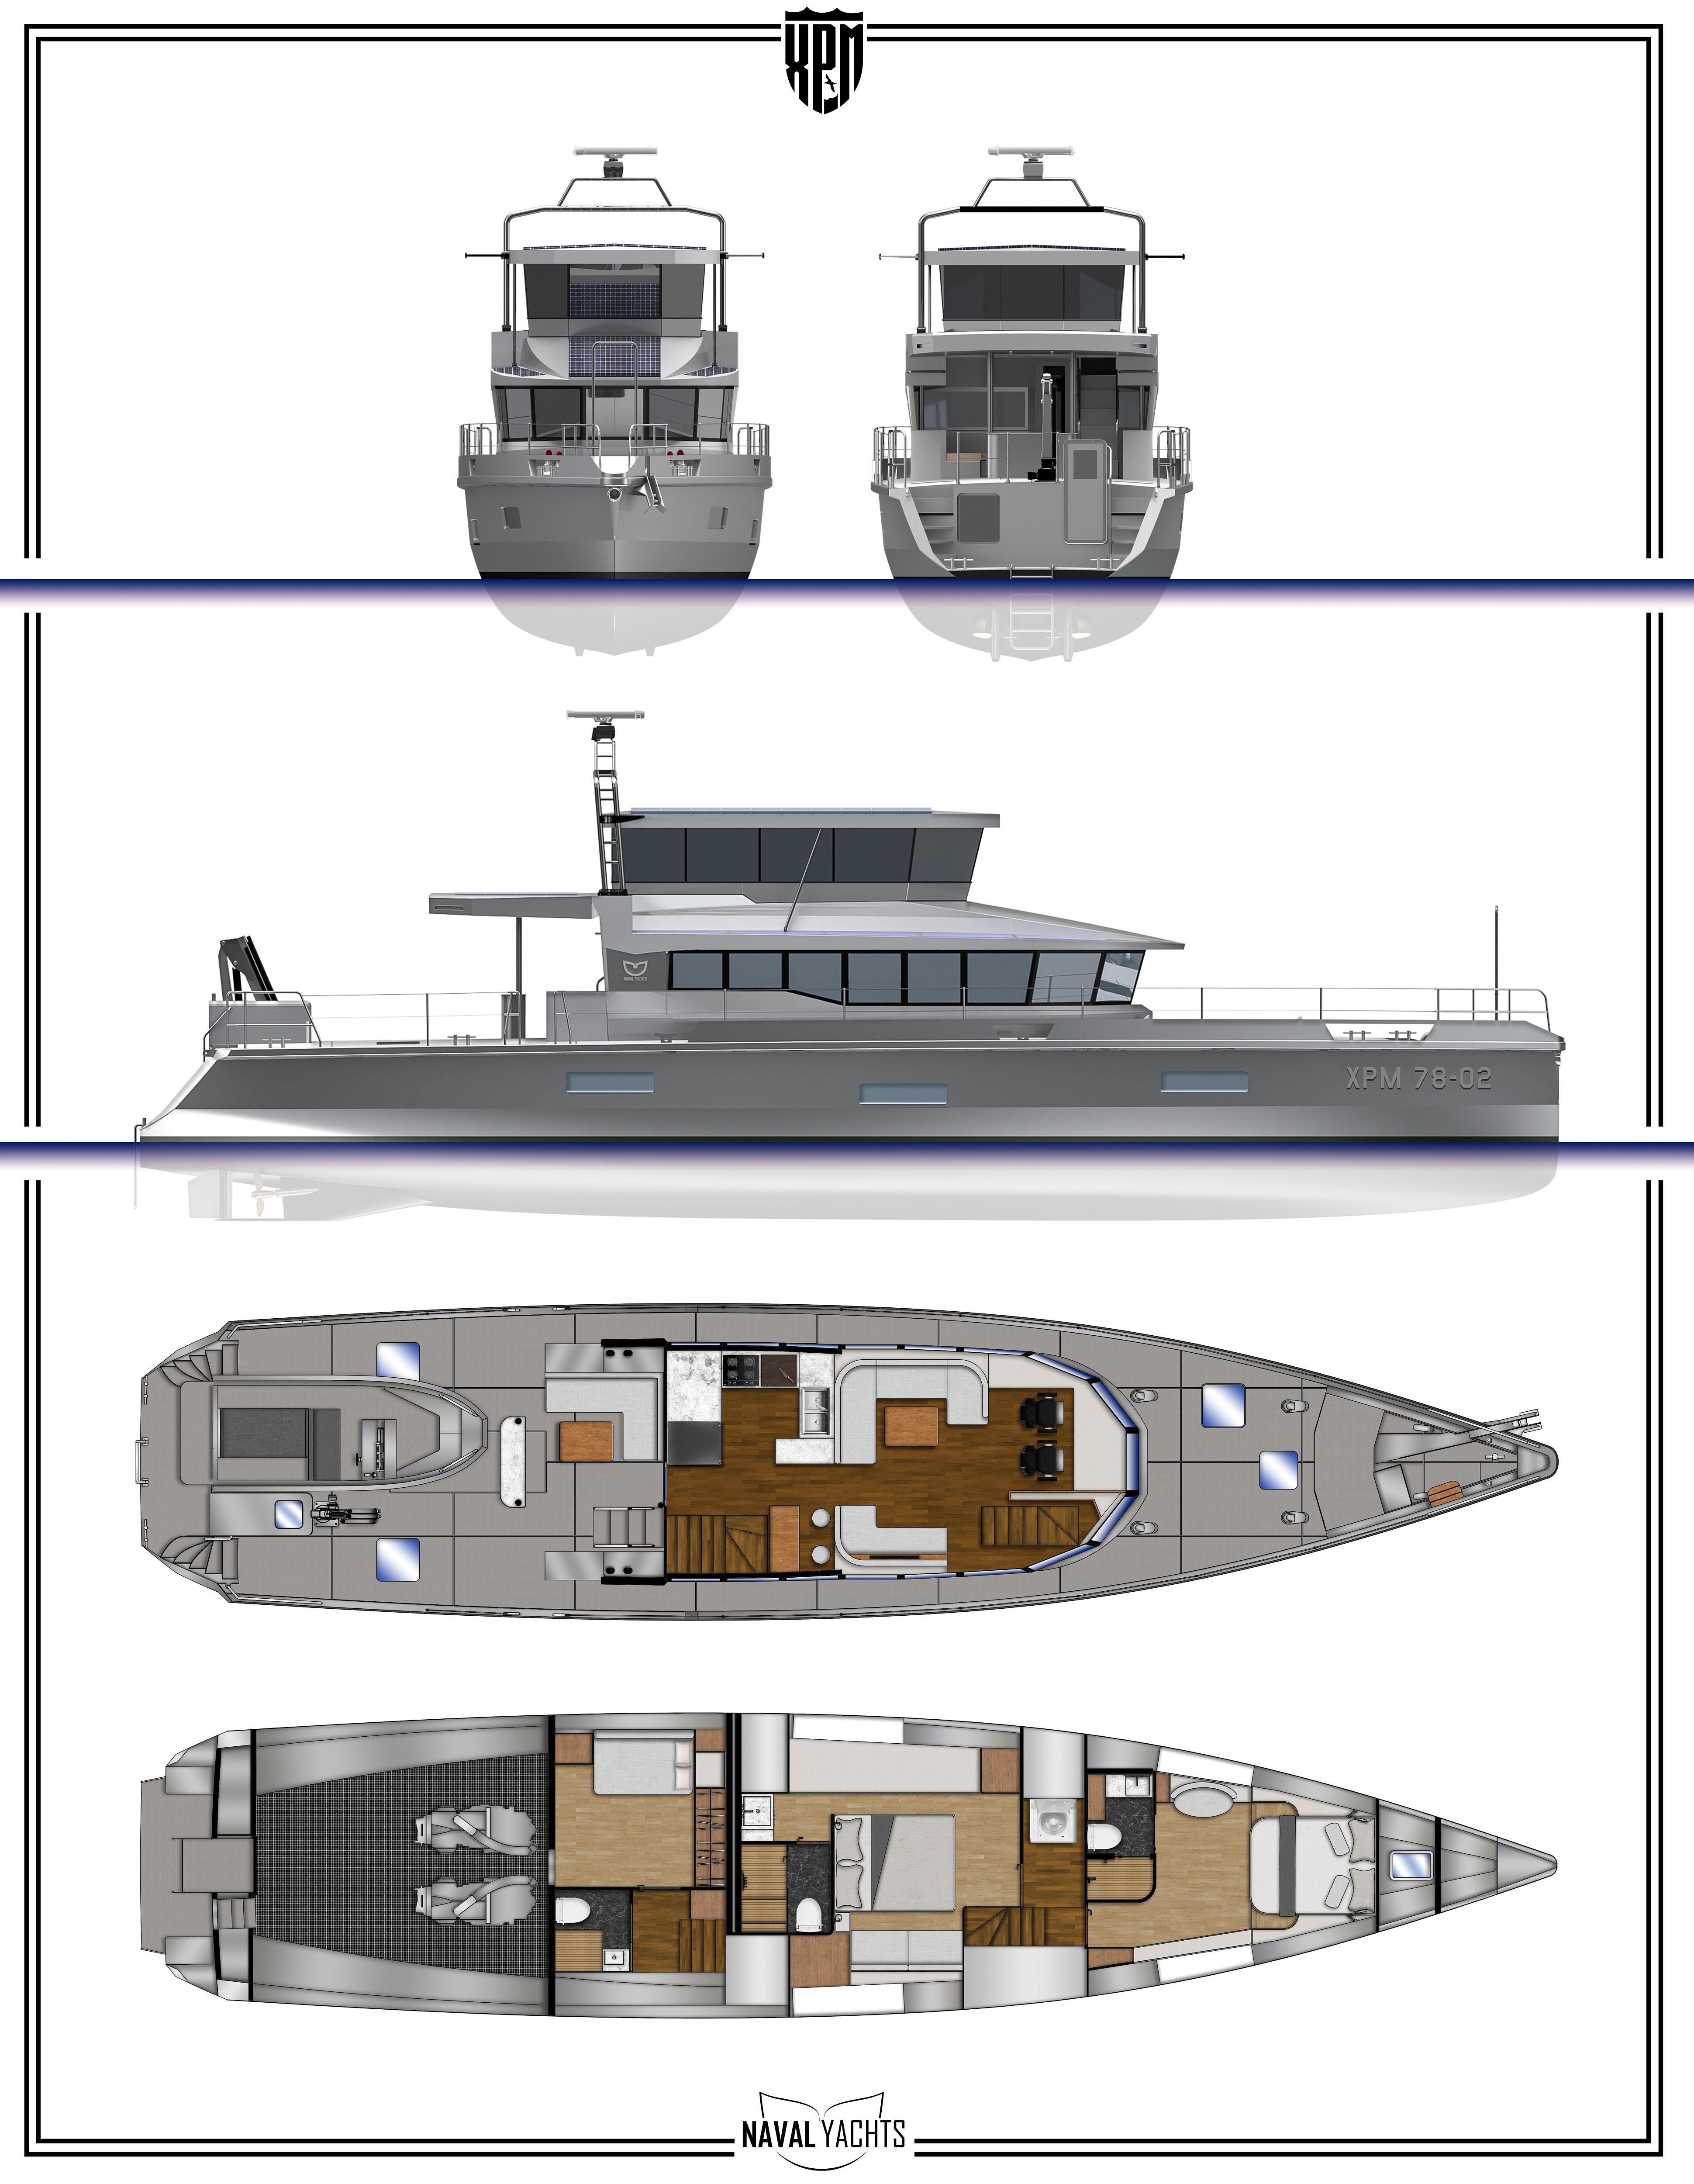 naval yachts xpm 78